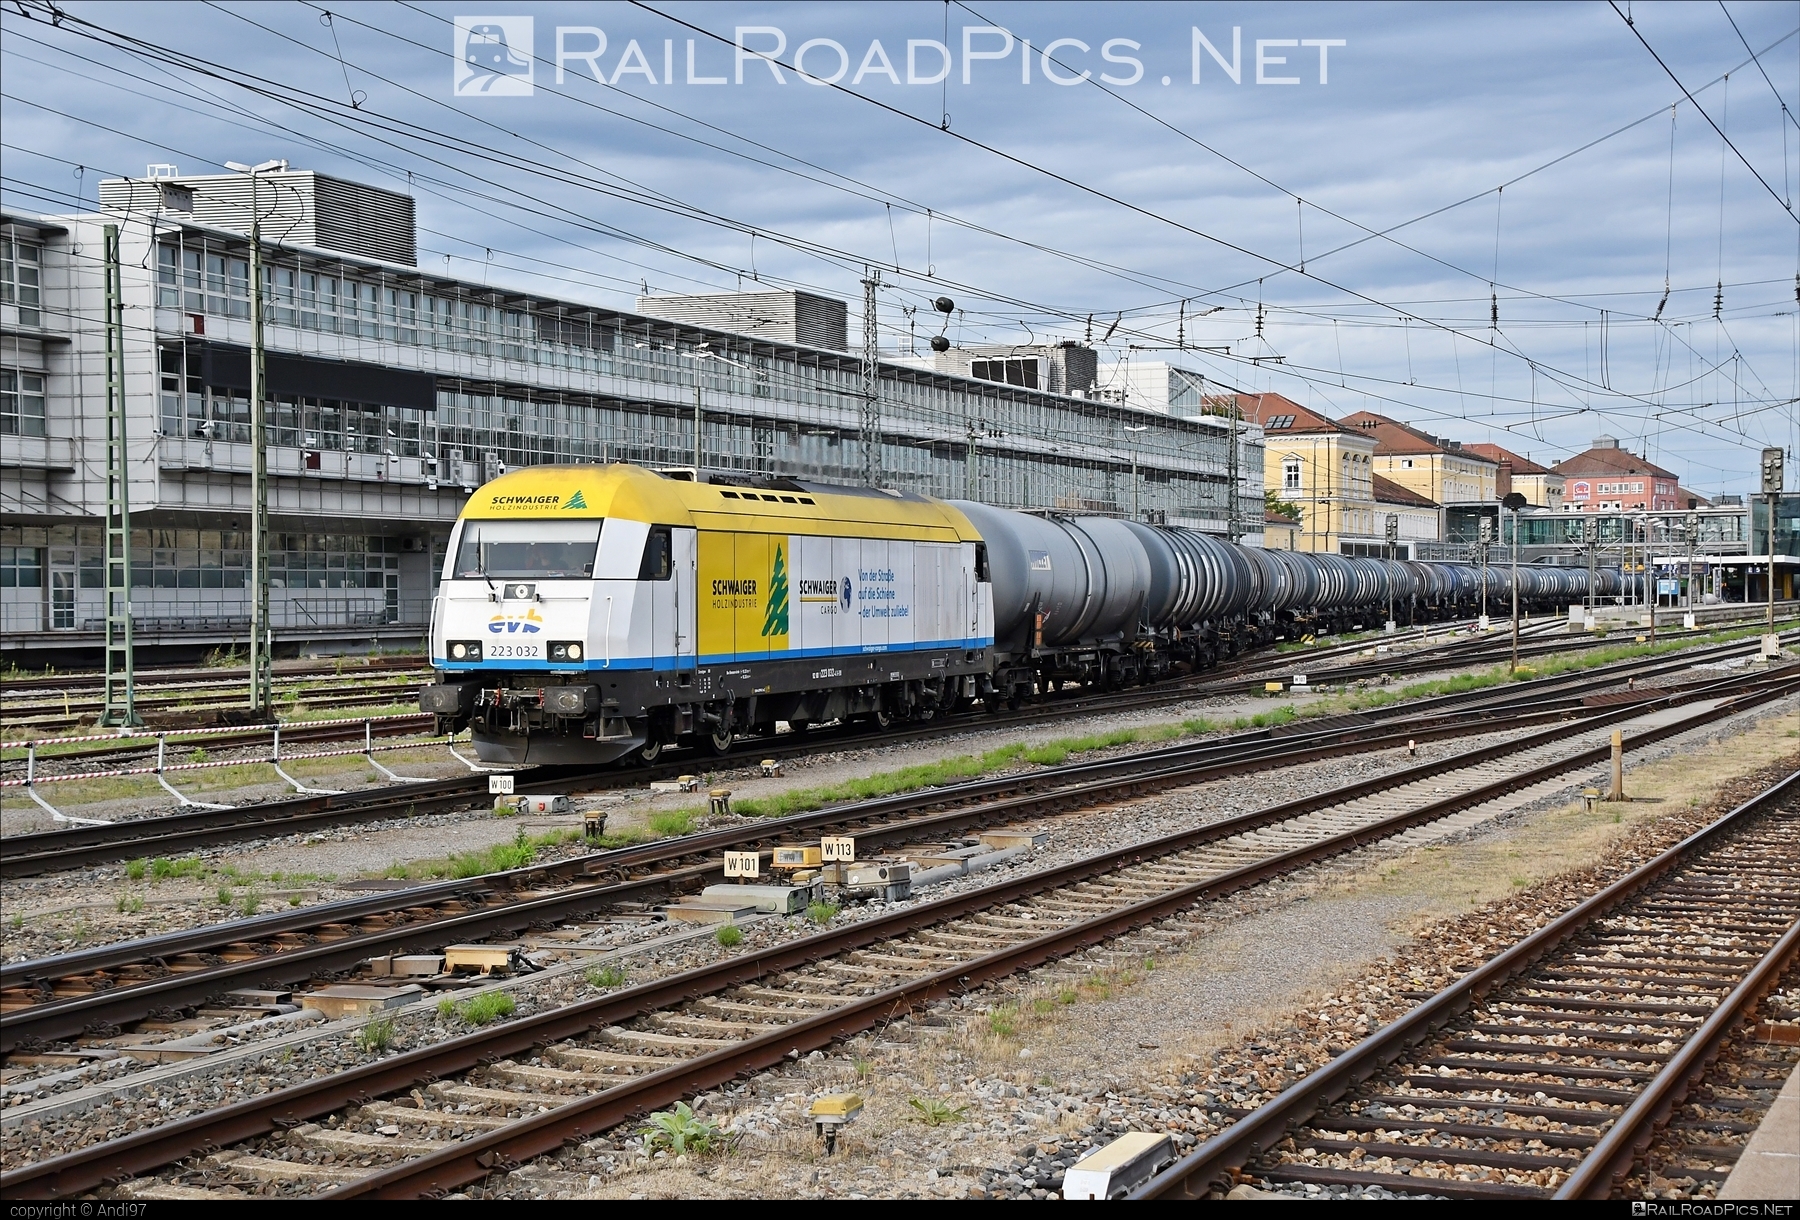 Siemens ER20 - 223 032 operated by Eisenbahnen und Verkehrsbetriebe Elbe-Weser #er20 #er20hercules #eurorunner #evb #gatx #hercules #kesselwagen #siemens #siemenser20 #siemenser20hercules #siemenseurorunner #siemenshercules #tankwagon